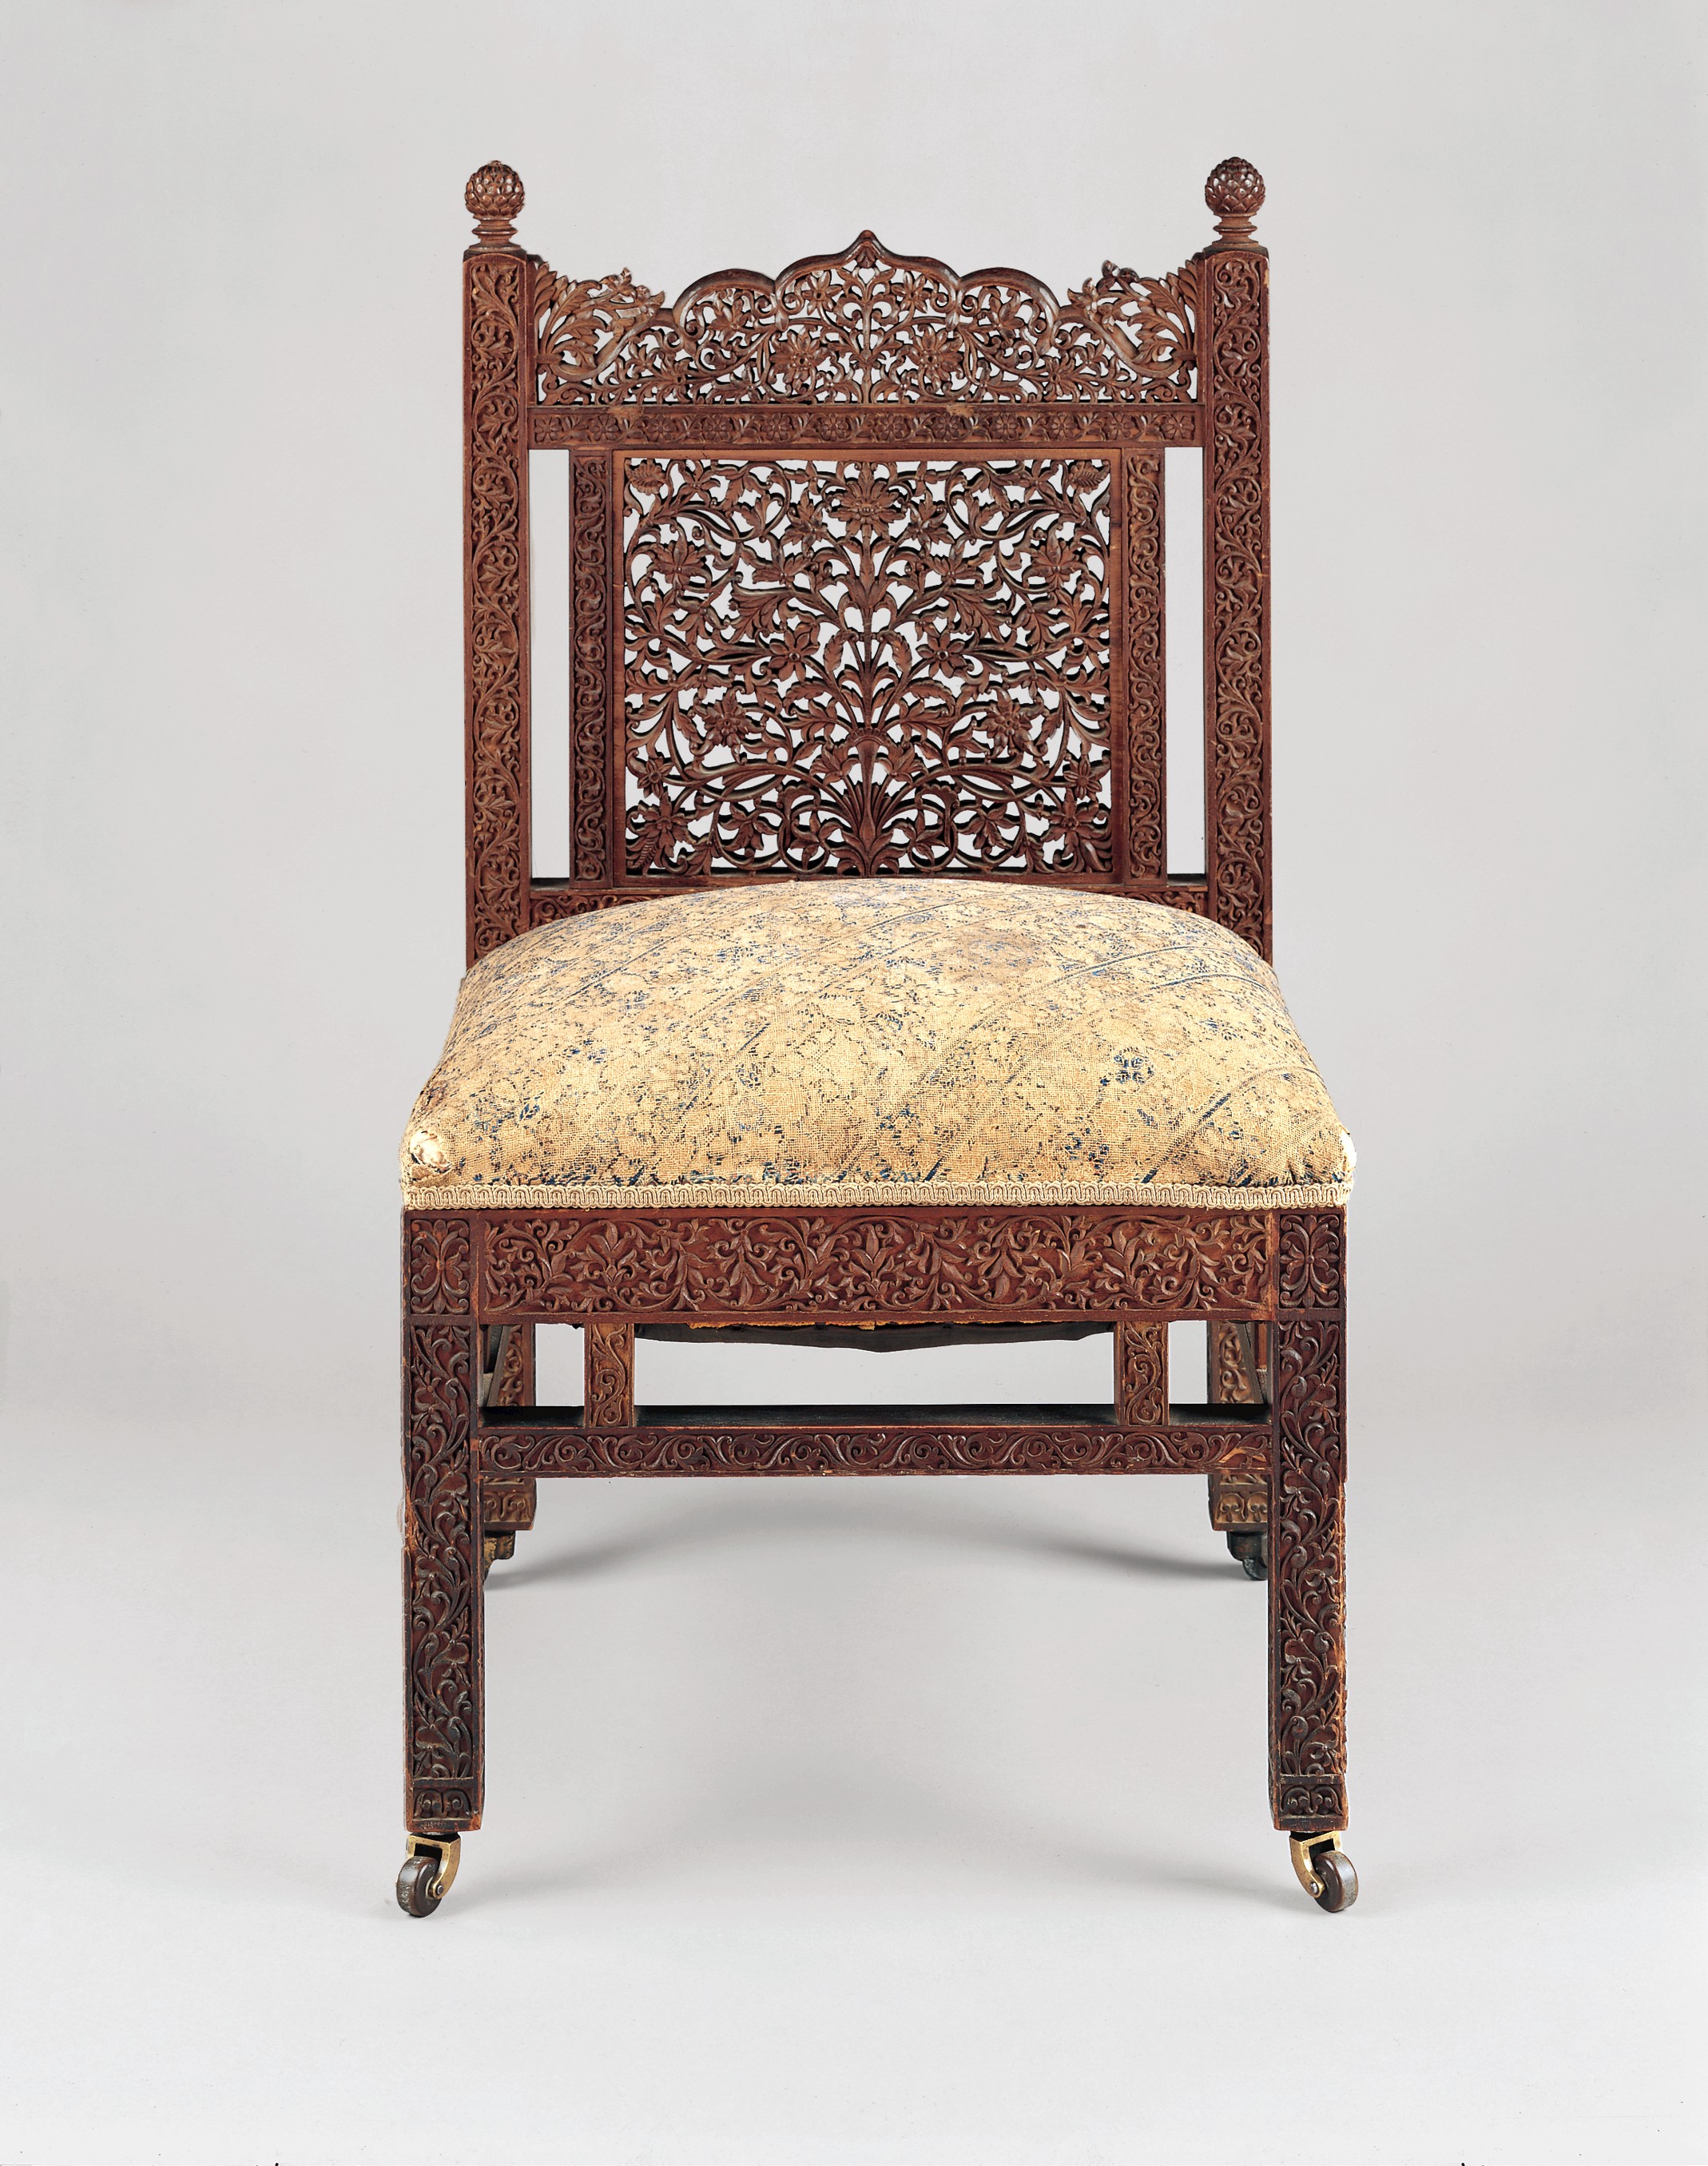 कुर्सी by Lockwood de Forest - c. 1881-6 - 82.2 x 46.4 x 47 सेमी 